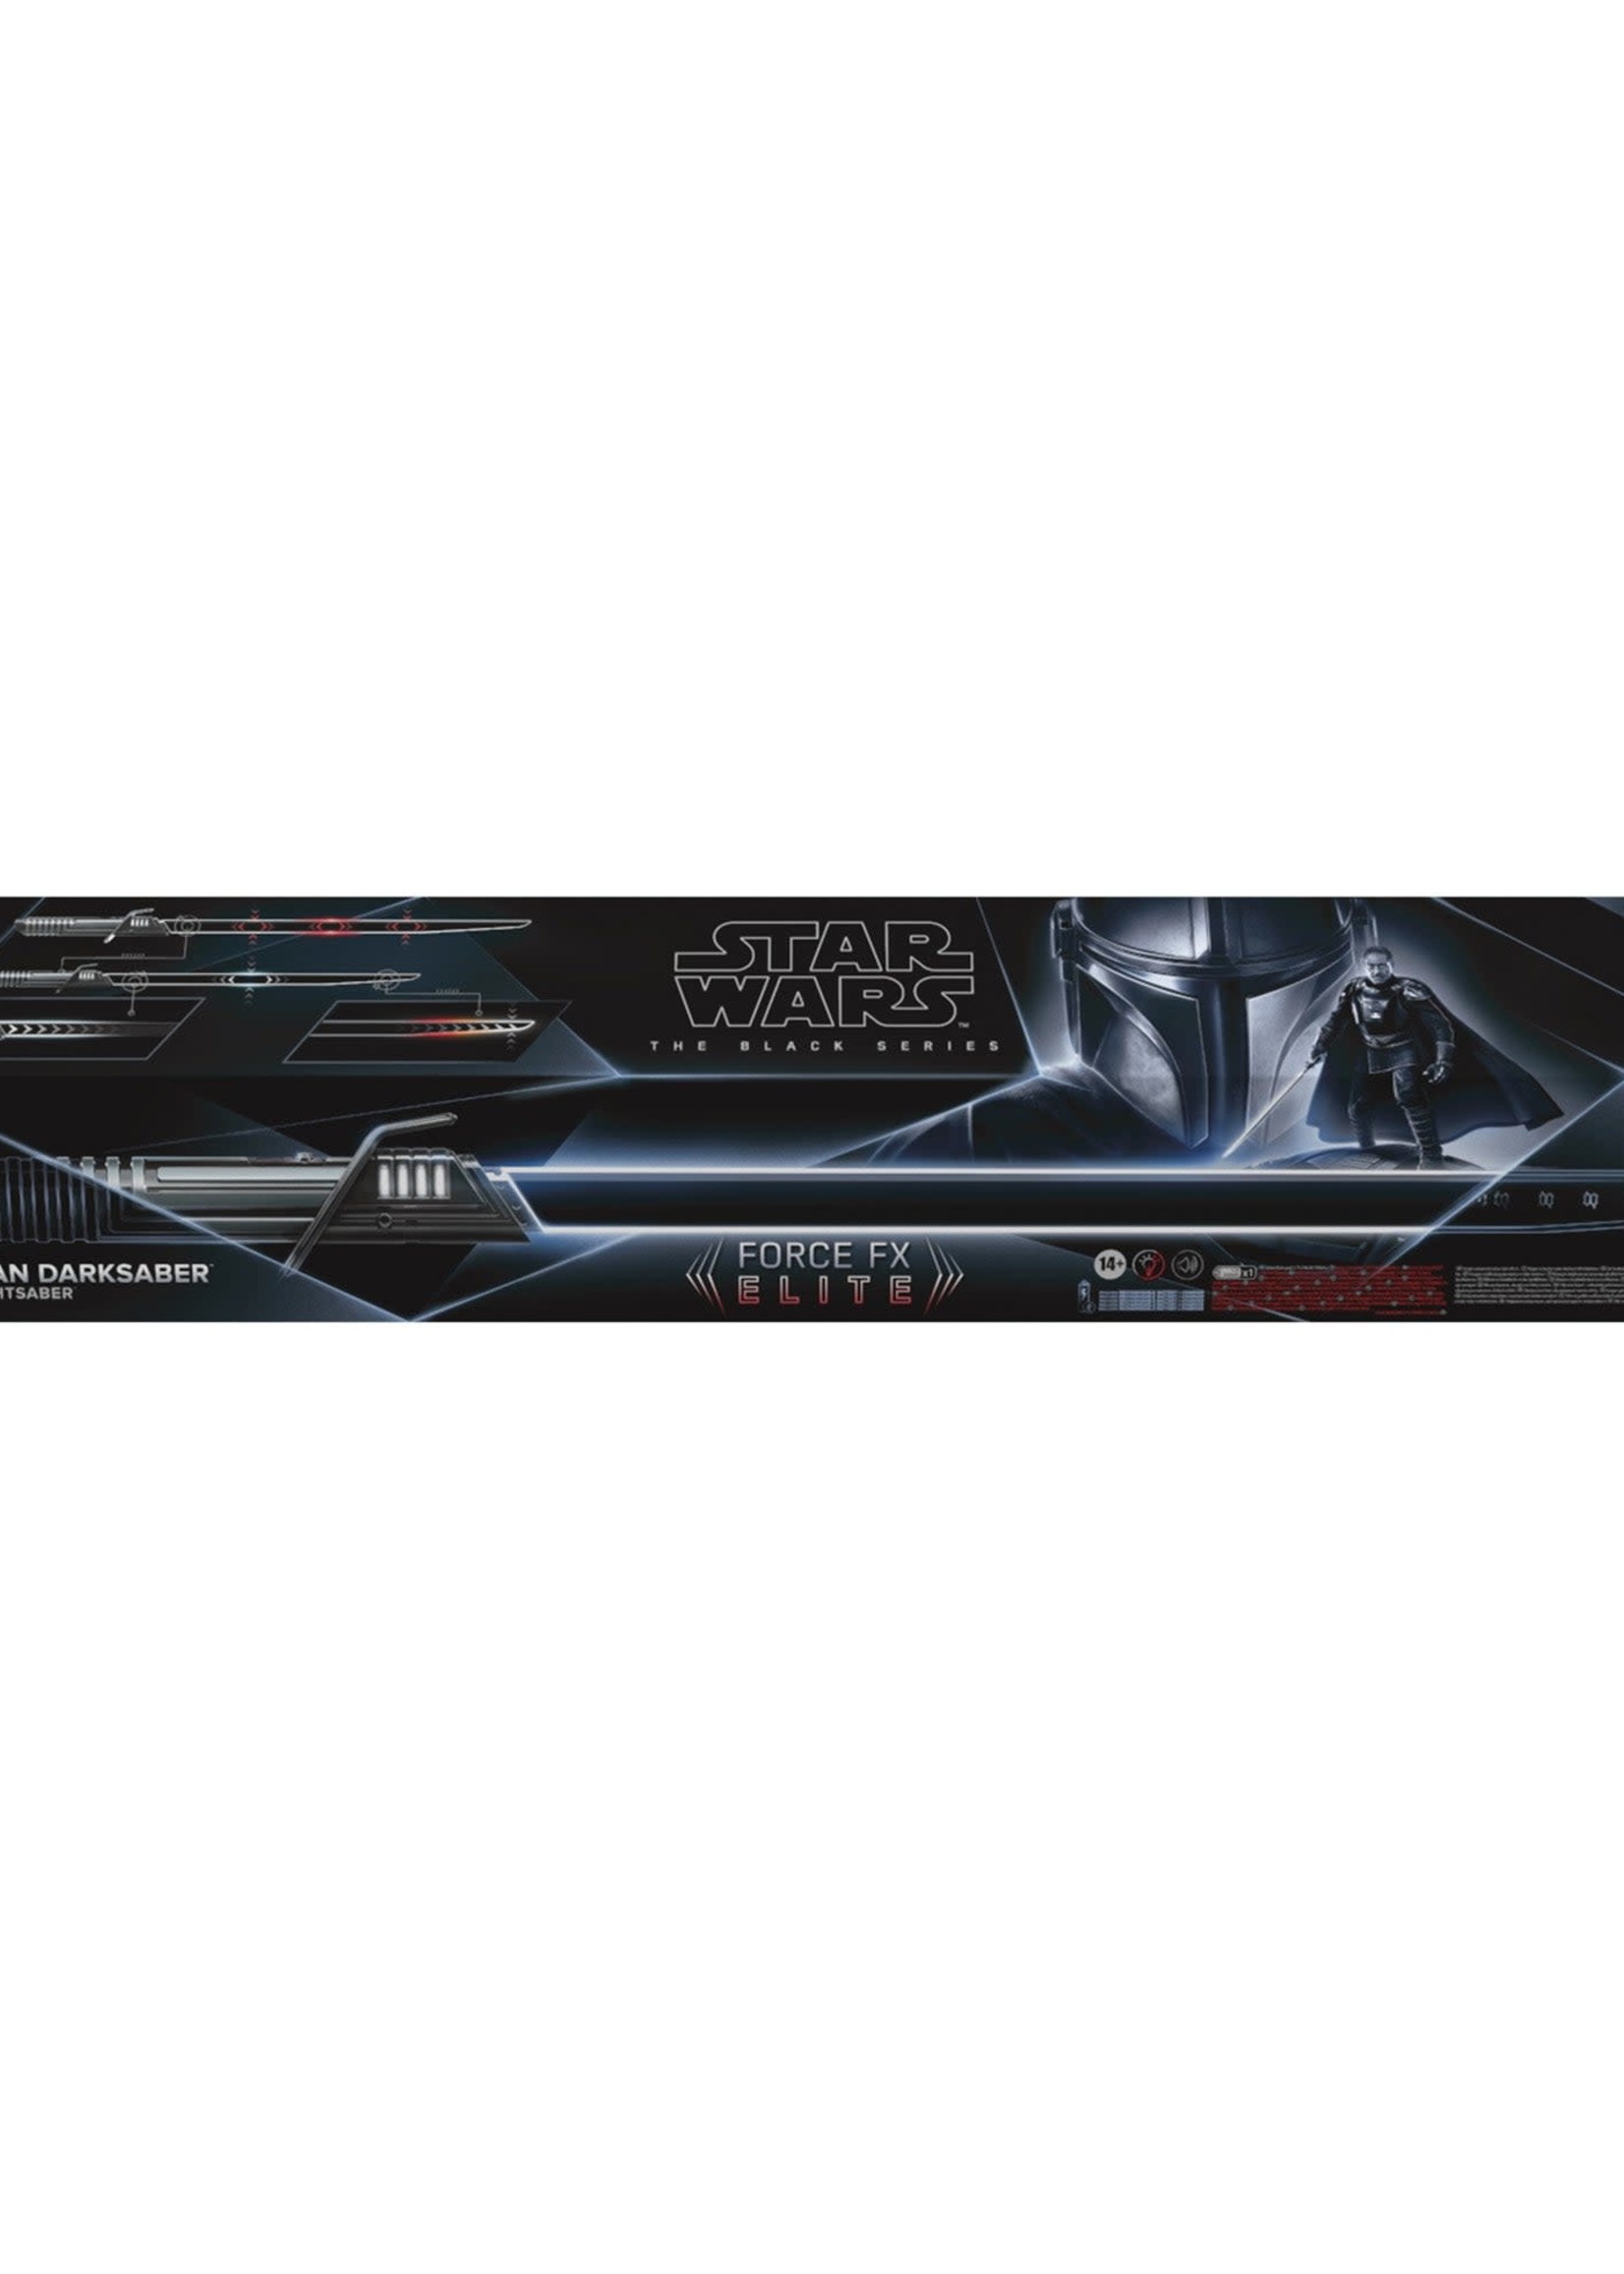 Star Wars Star Wars the Black Series: Mandalorian Darksaber Force FX Elite Lightsaber collectible